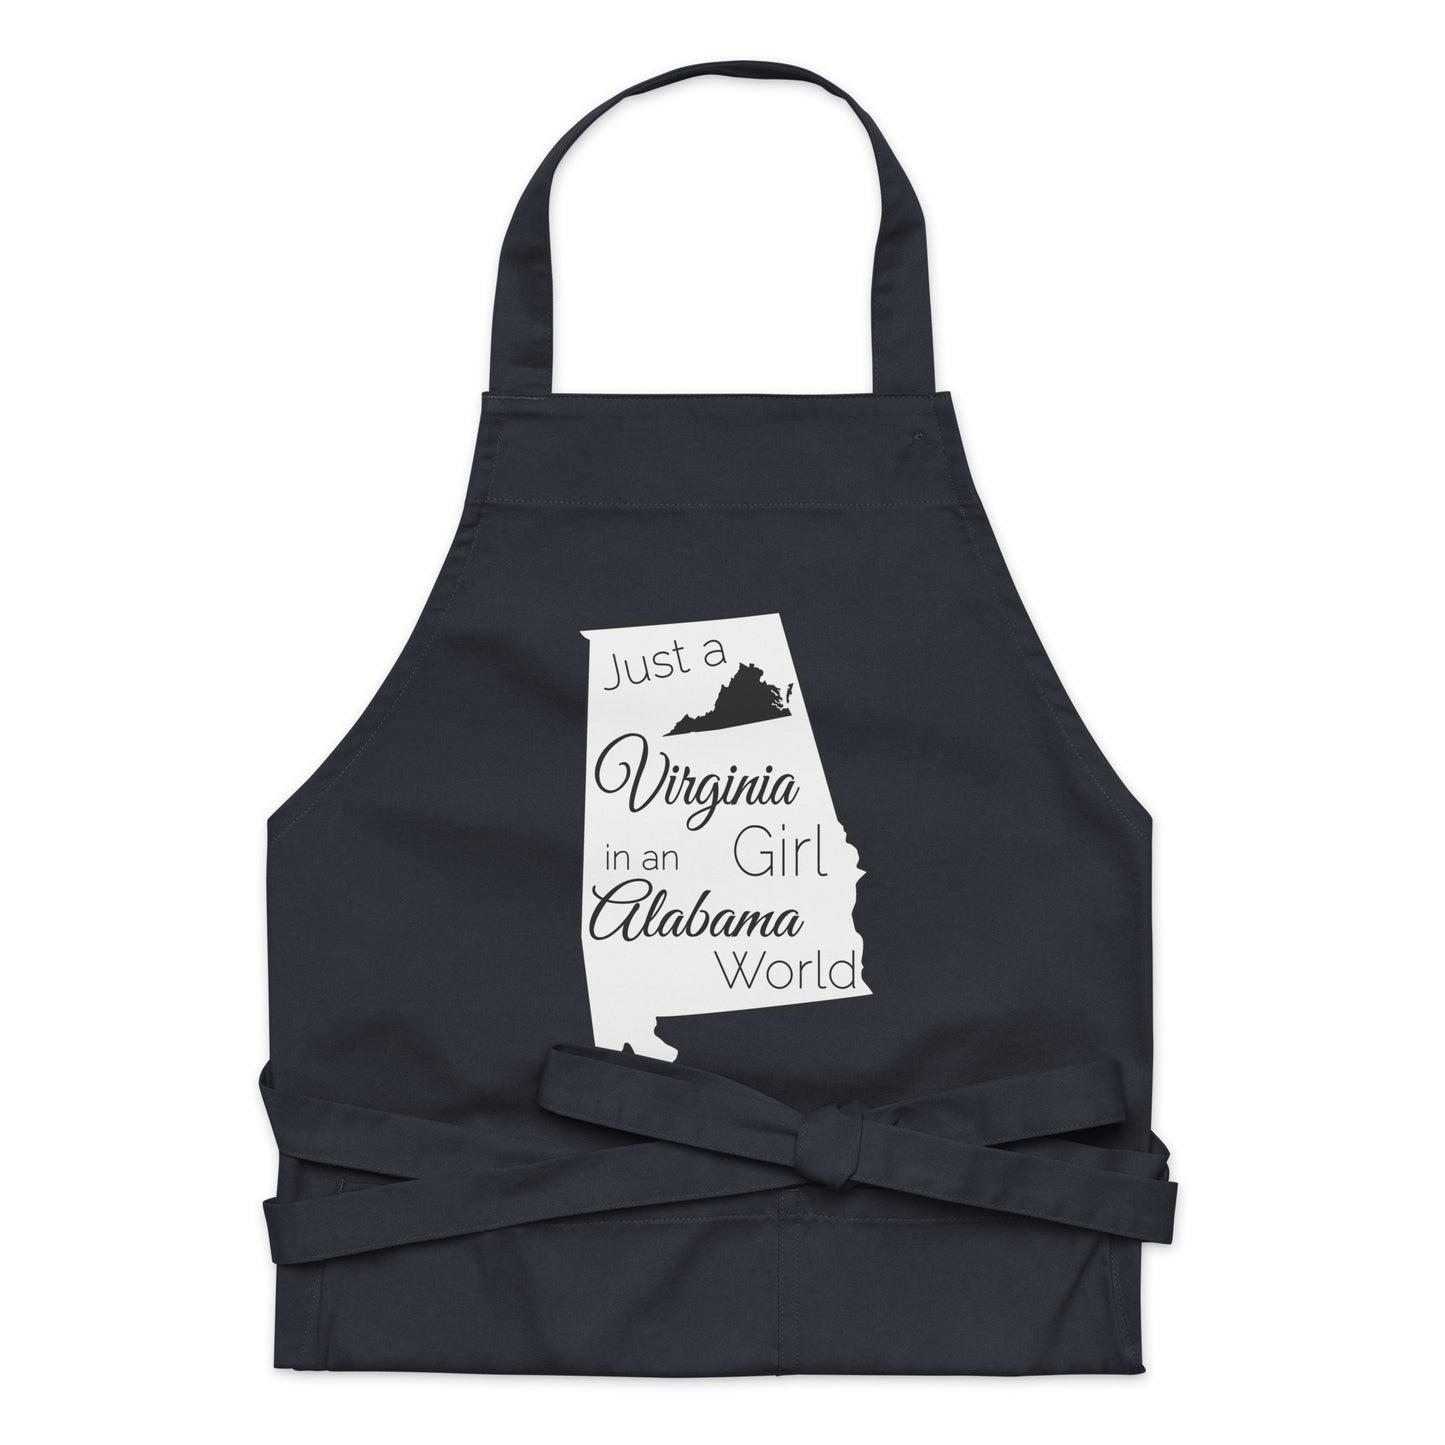 Just a Virginia Girl in an Alabama World Organic cotton apron